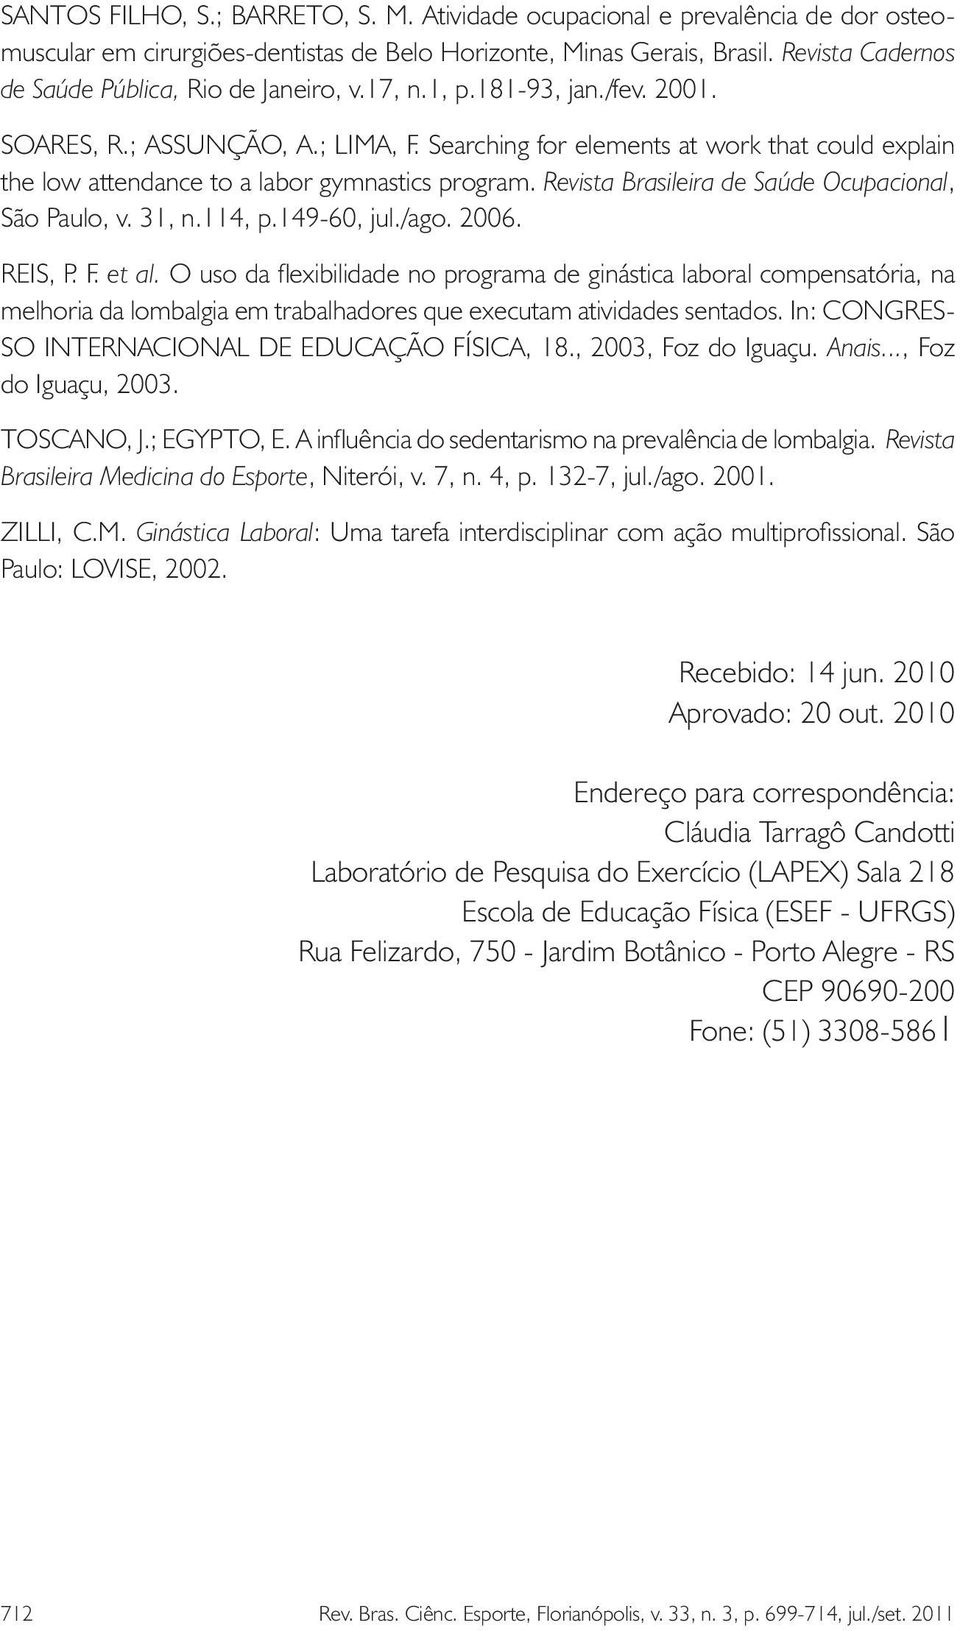 Searching for elements at work that could explain the low attendance to a labor gymnastics program. Revista Brasileira de Saúde Ocupacional, São Paulo, v. 31, n.114, p.149-60, jul./ago. 2006. REIS, P.